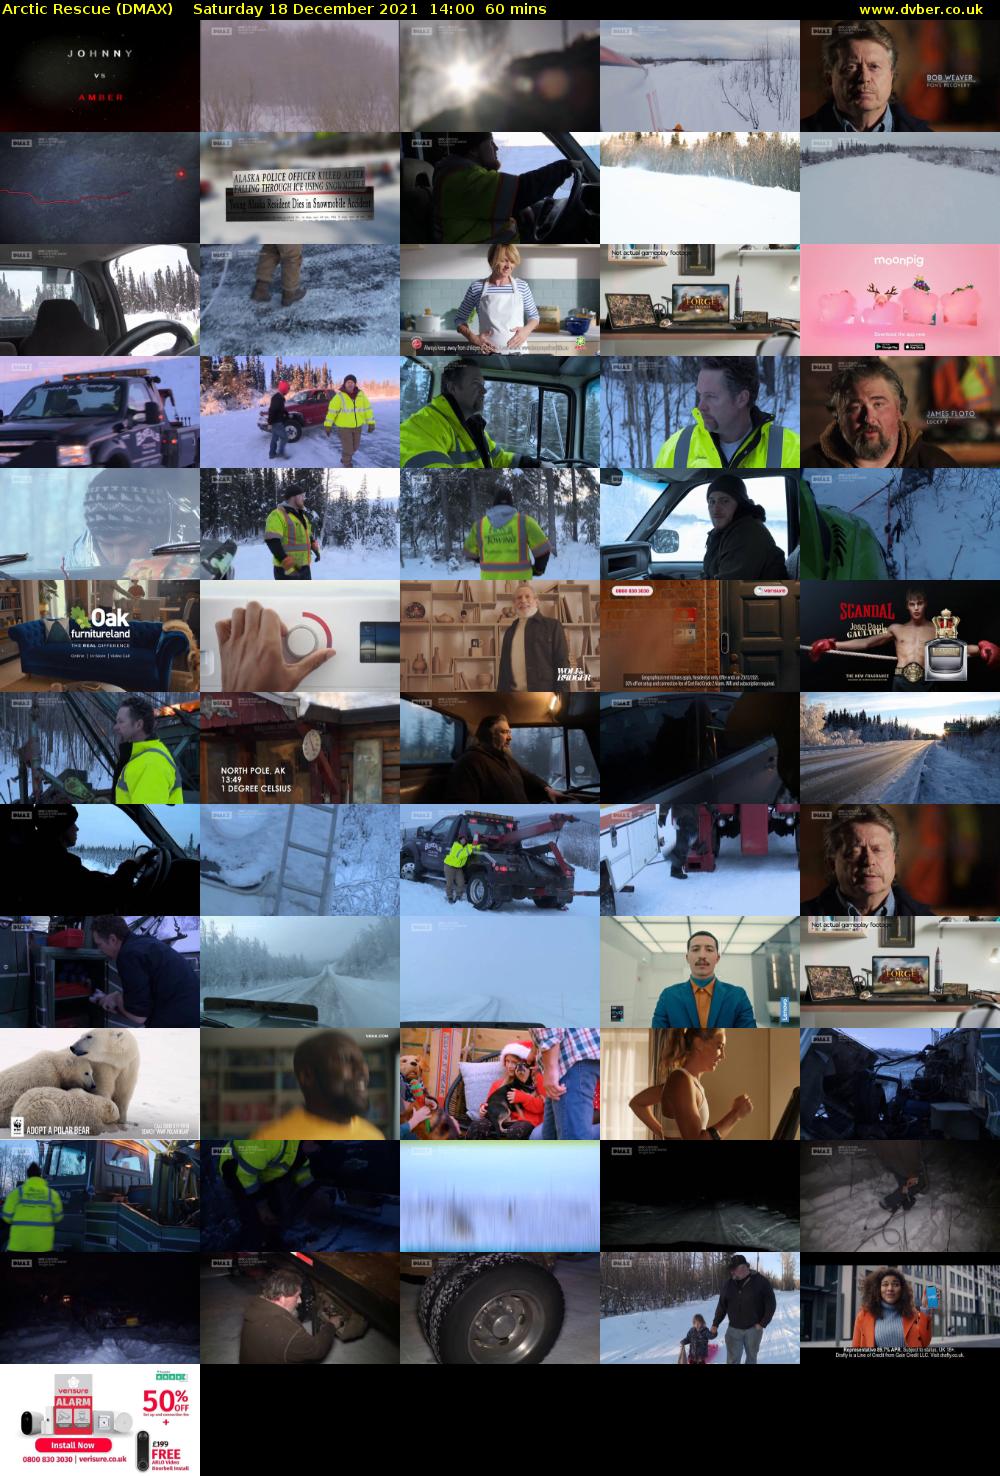 Arctic Rescue (DMAX) Saturday 18 December 2021 14:00 - 15:00